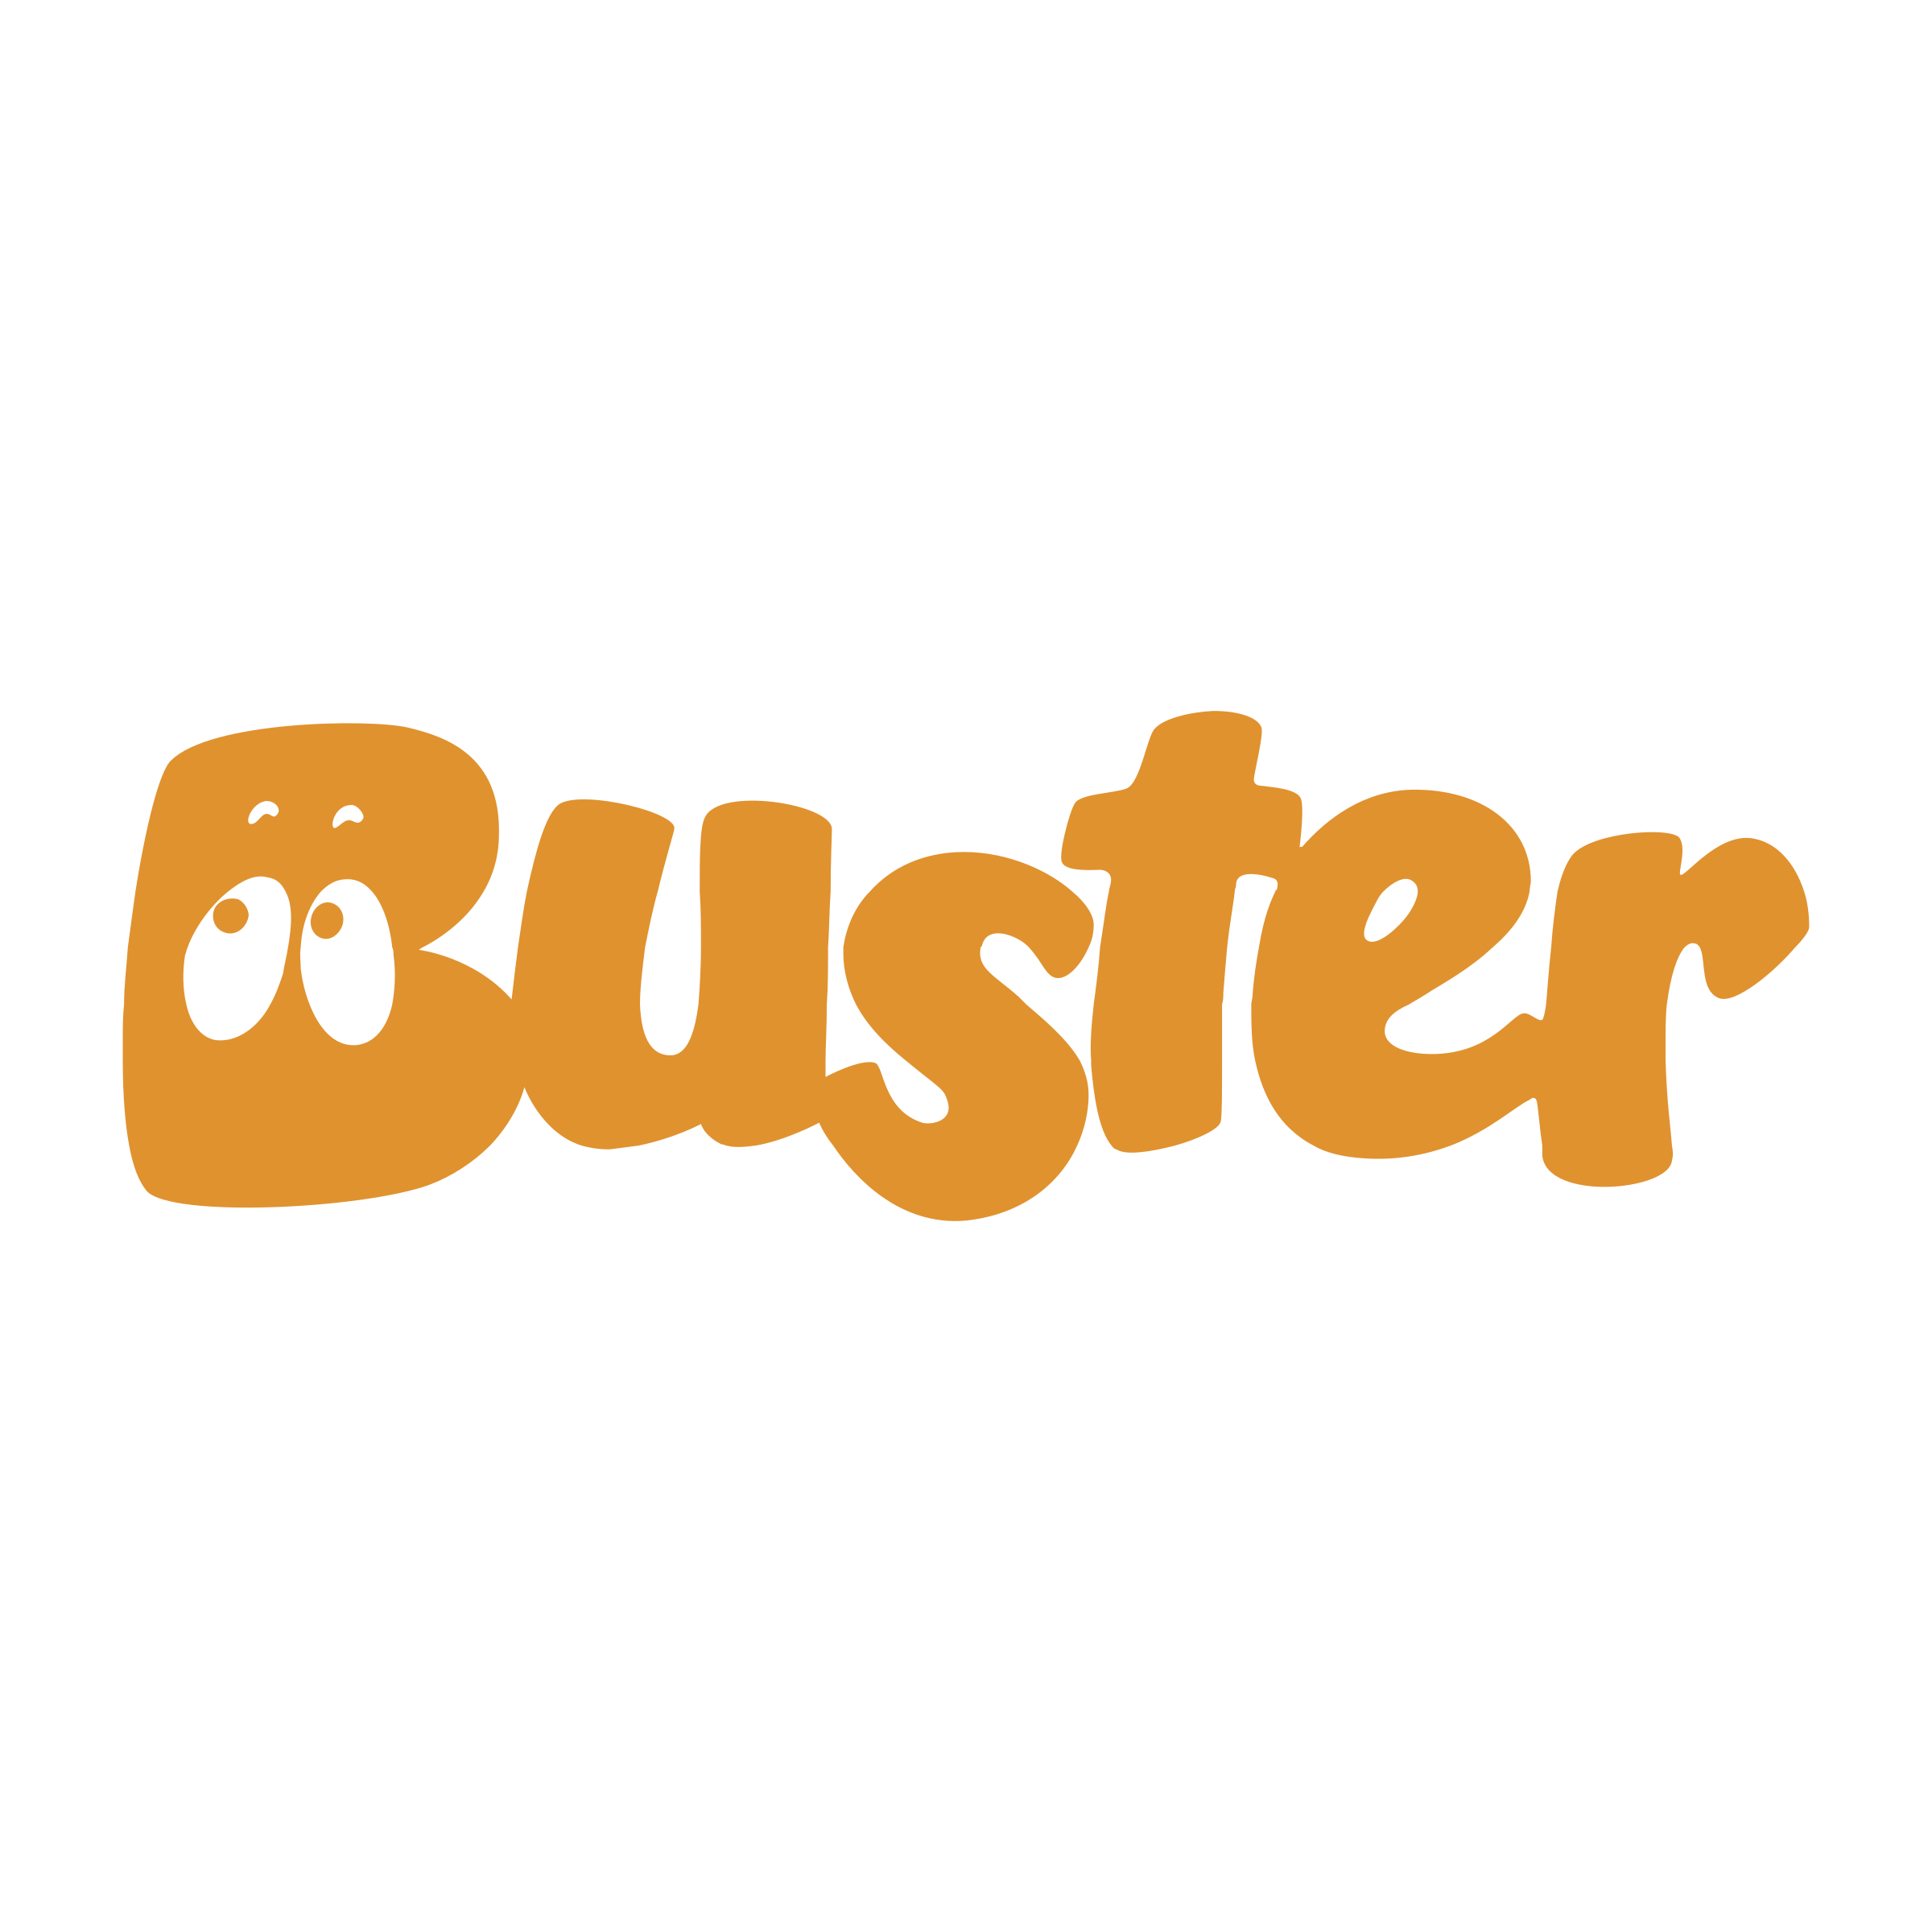 Buster Logo - Buster Logo PNG Transparent & SVG Vector - Freebie Supply